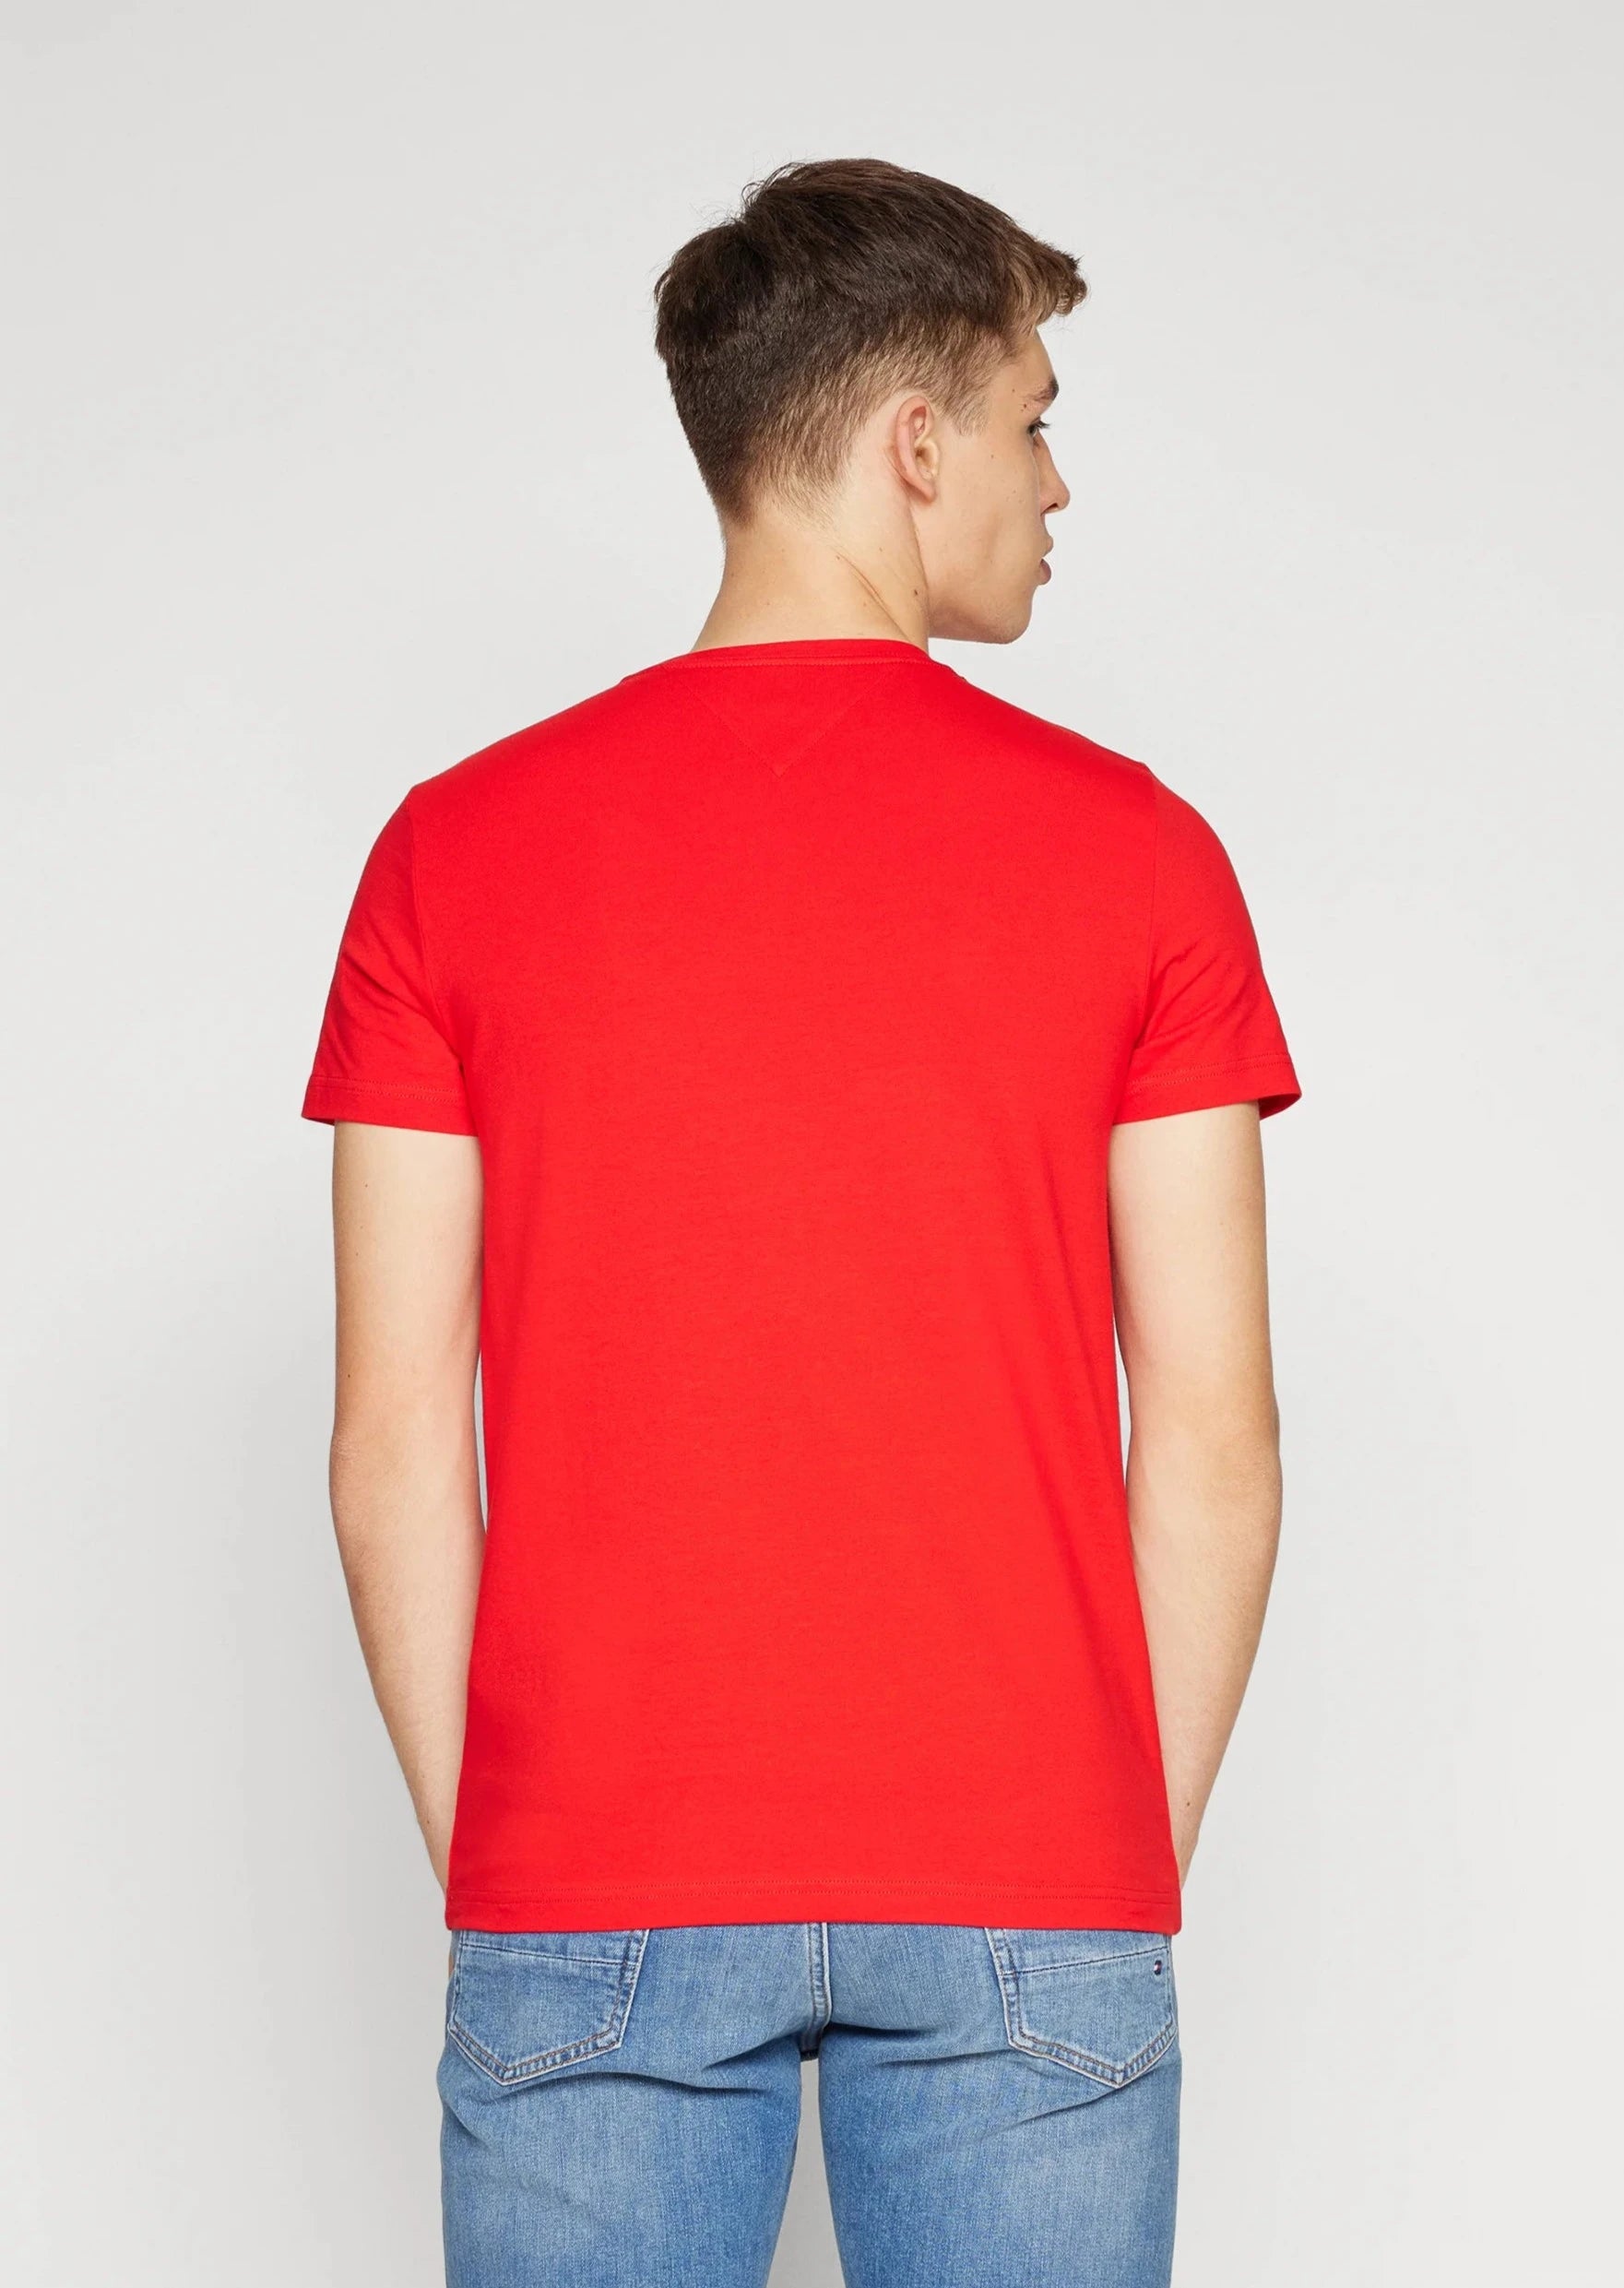 T-Shirt Tommy Hilfiger rouge en coton bio stretch | Georgespaul